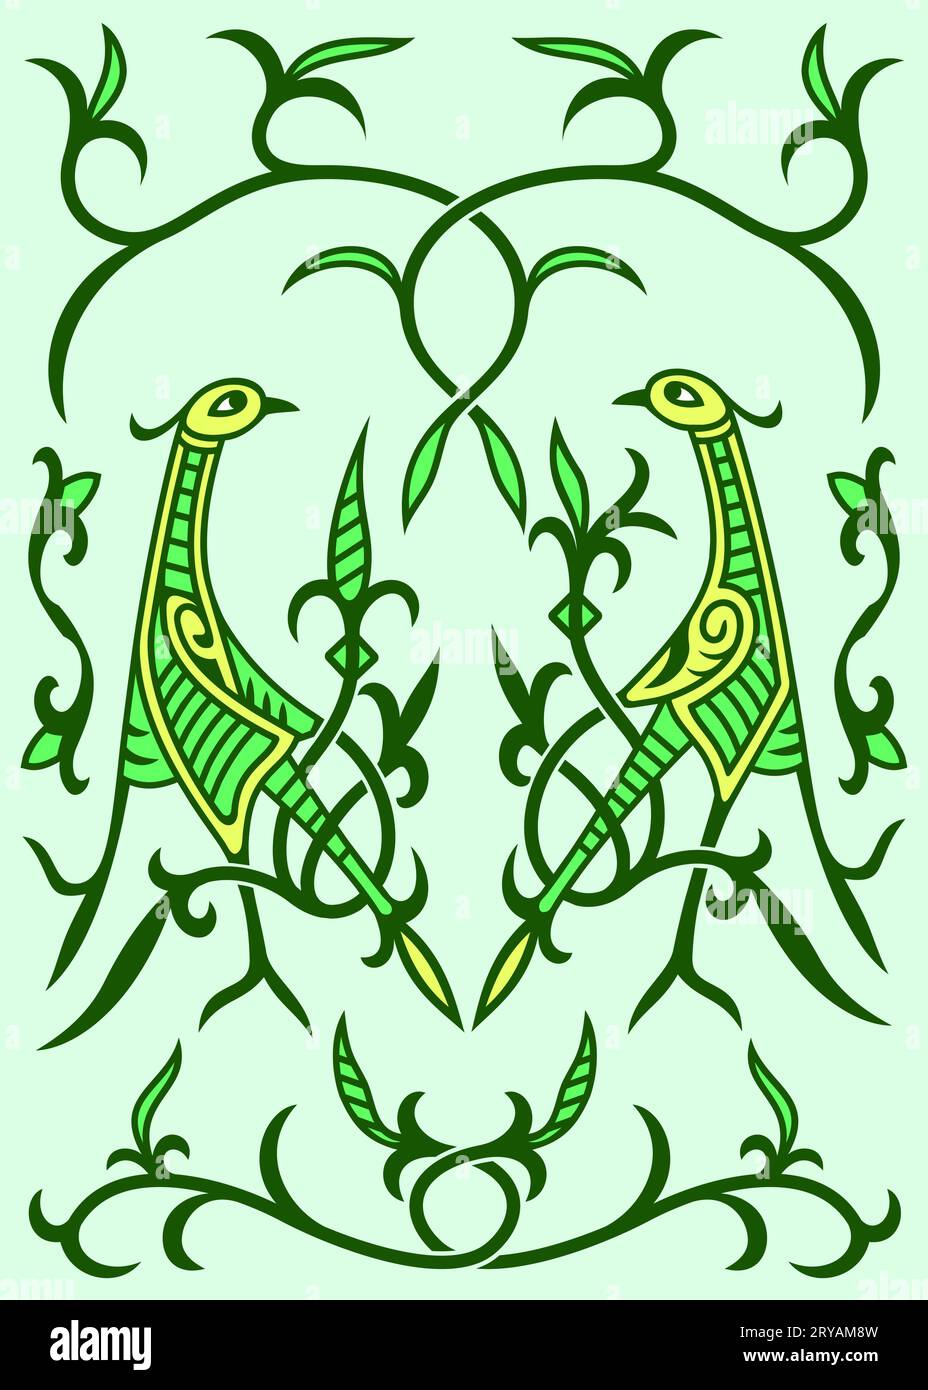 Dancing Storks. Traditional Slavic ornament in green spring colors. Vector illustration, poster. Stock Vector